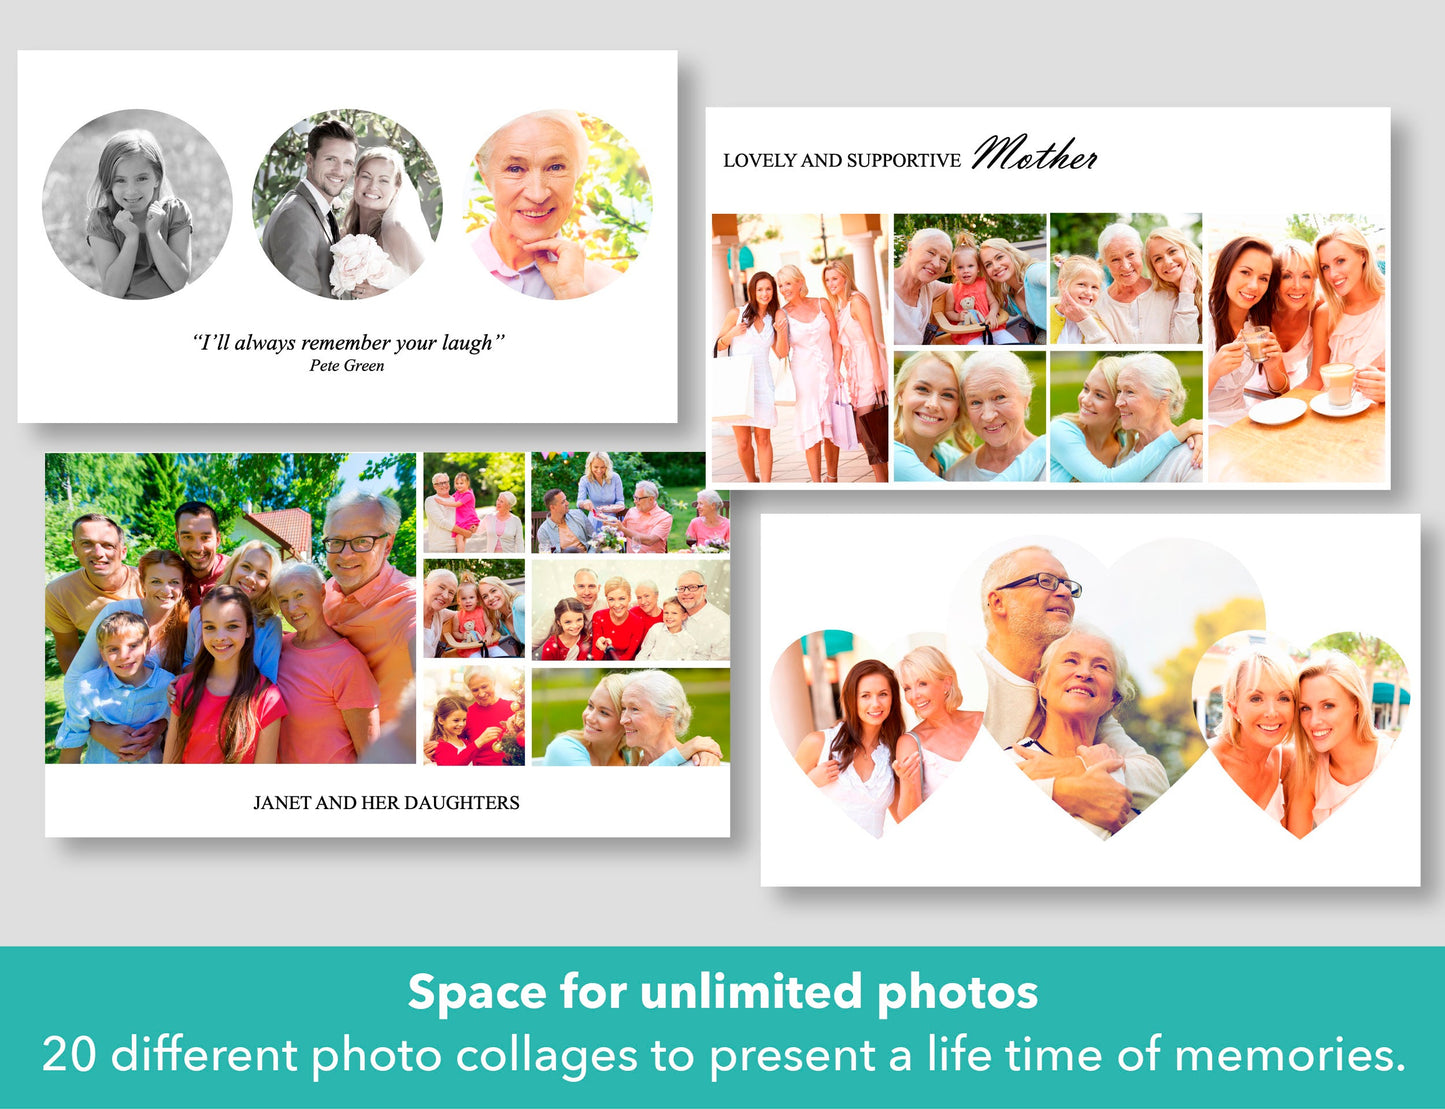 Premium Funeral Slideshow Template in Minimalist White